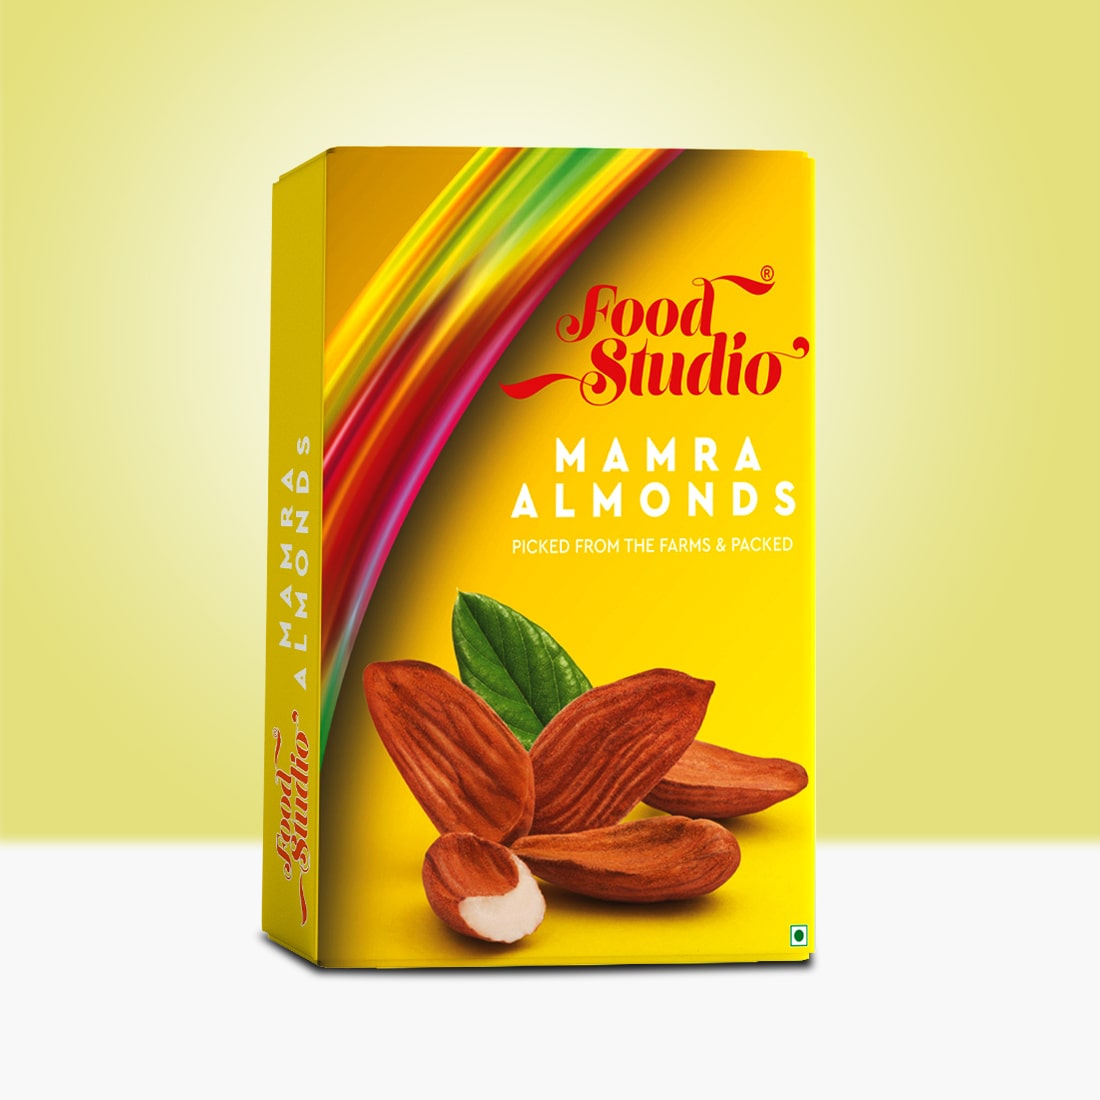 Food Studio Premium Raw Mamra Almonds Yellow Box | Delight & Healthy